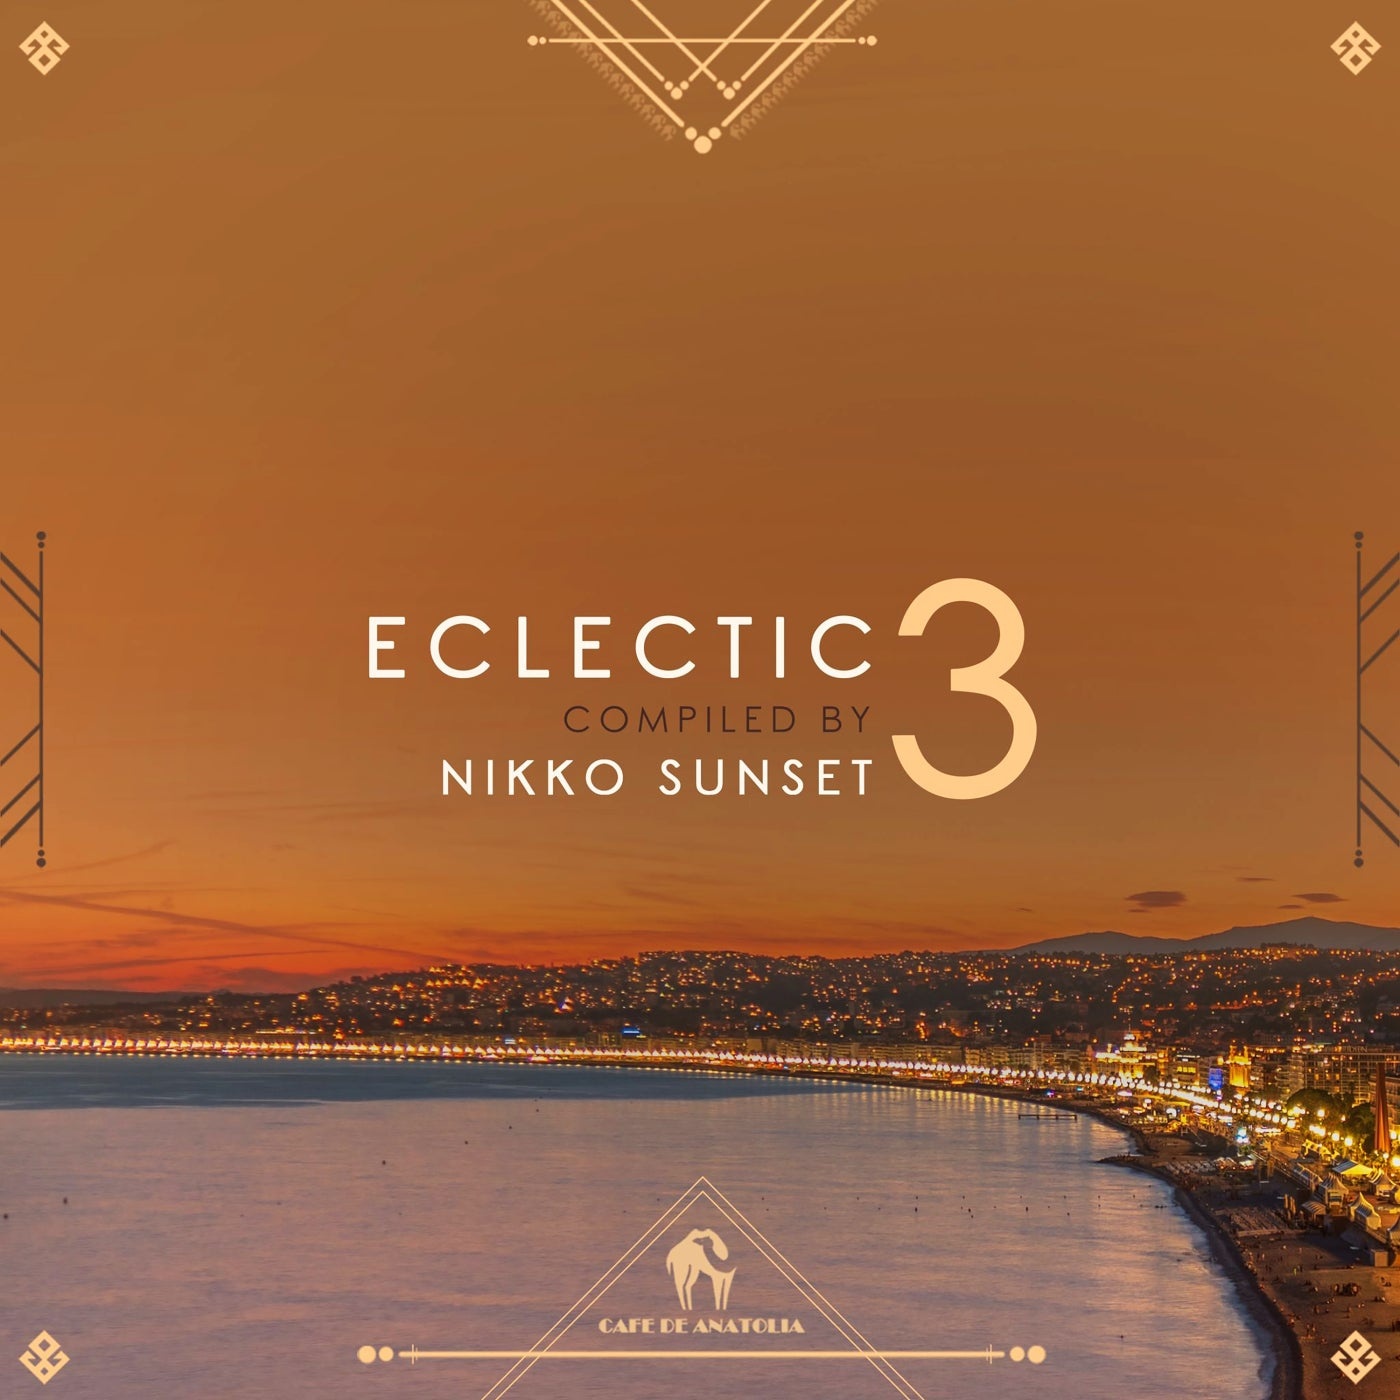 VA - Eclectic Ethno 3 by Nikko Sunset [CDA034]